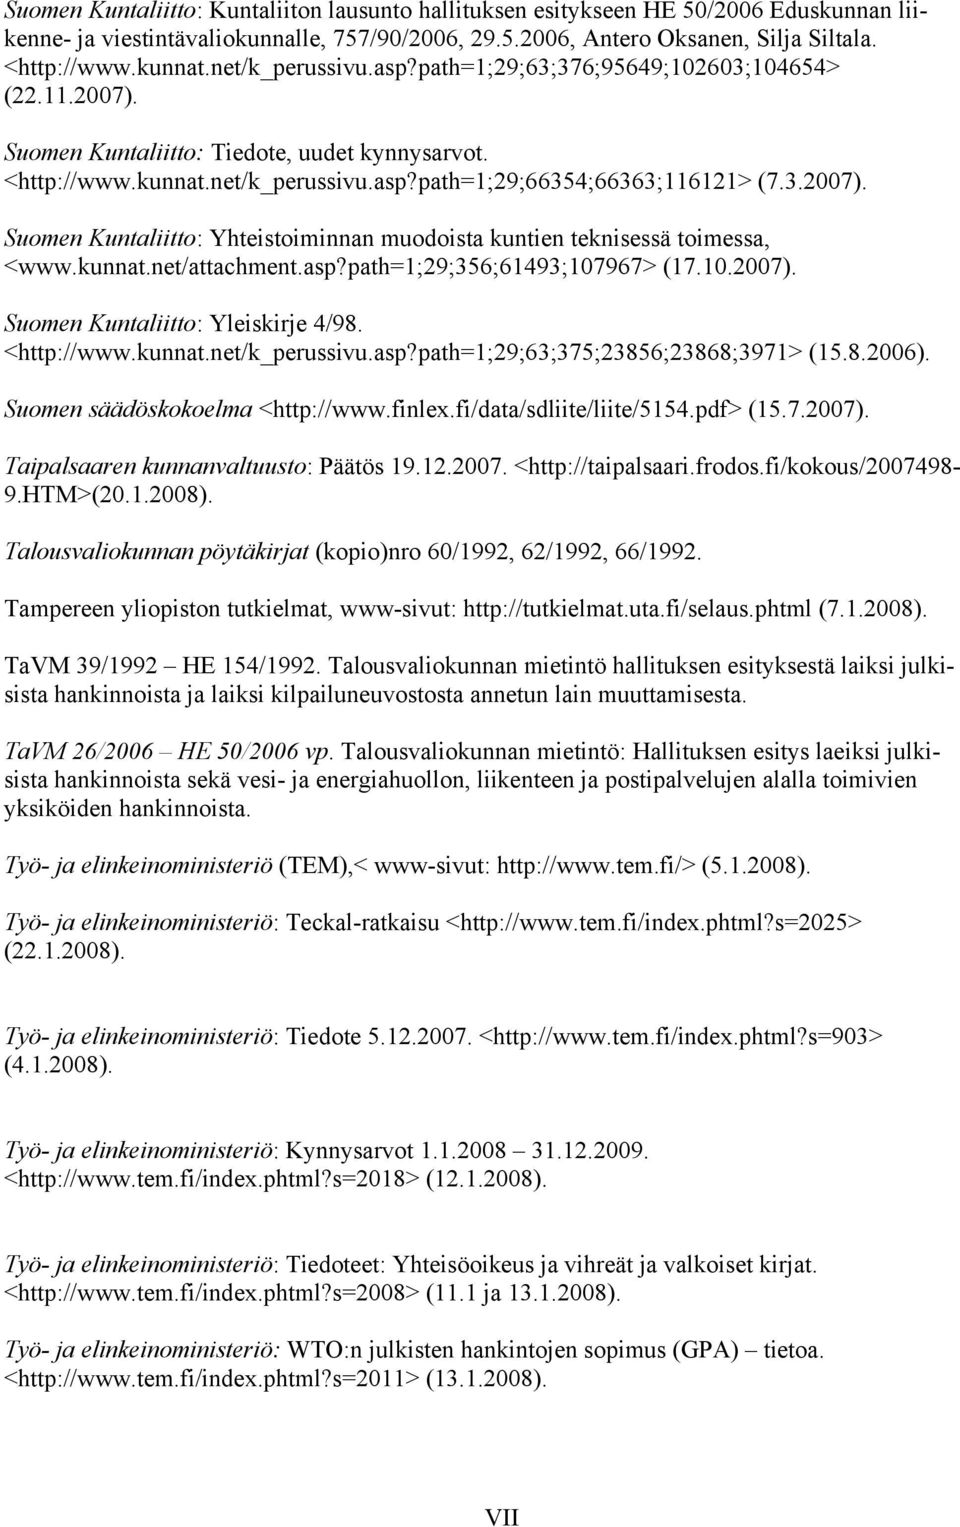 kunnat.net/attachment.asp?path=1;29;356;61493;107967> (17.10.2007). Suomen Kuntaliitto: Yleiskirje 4/98. <http://www.kunnat.net/k_perussivu.asp?path=1;29;63;375;23856;23868;3971> (15.8.2006).